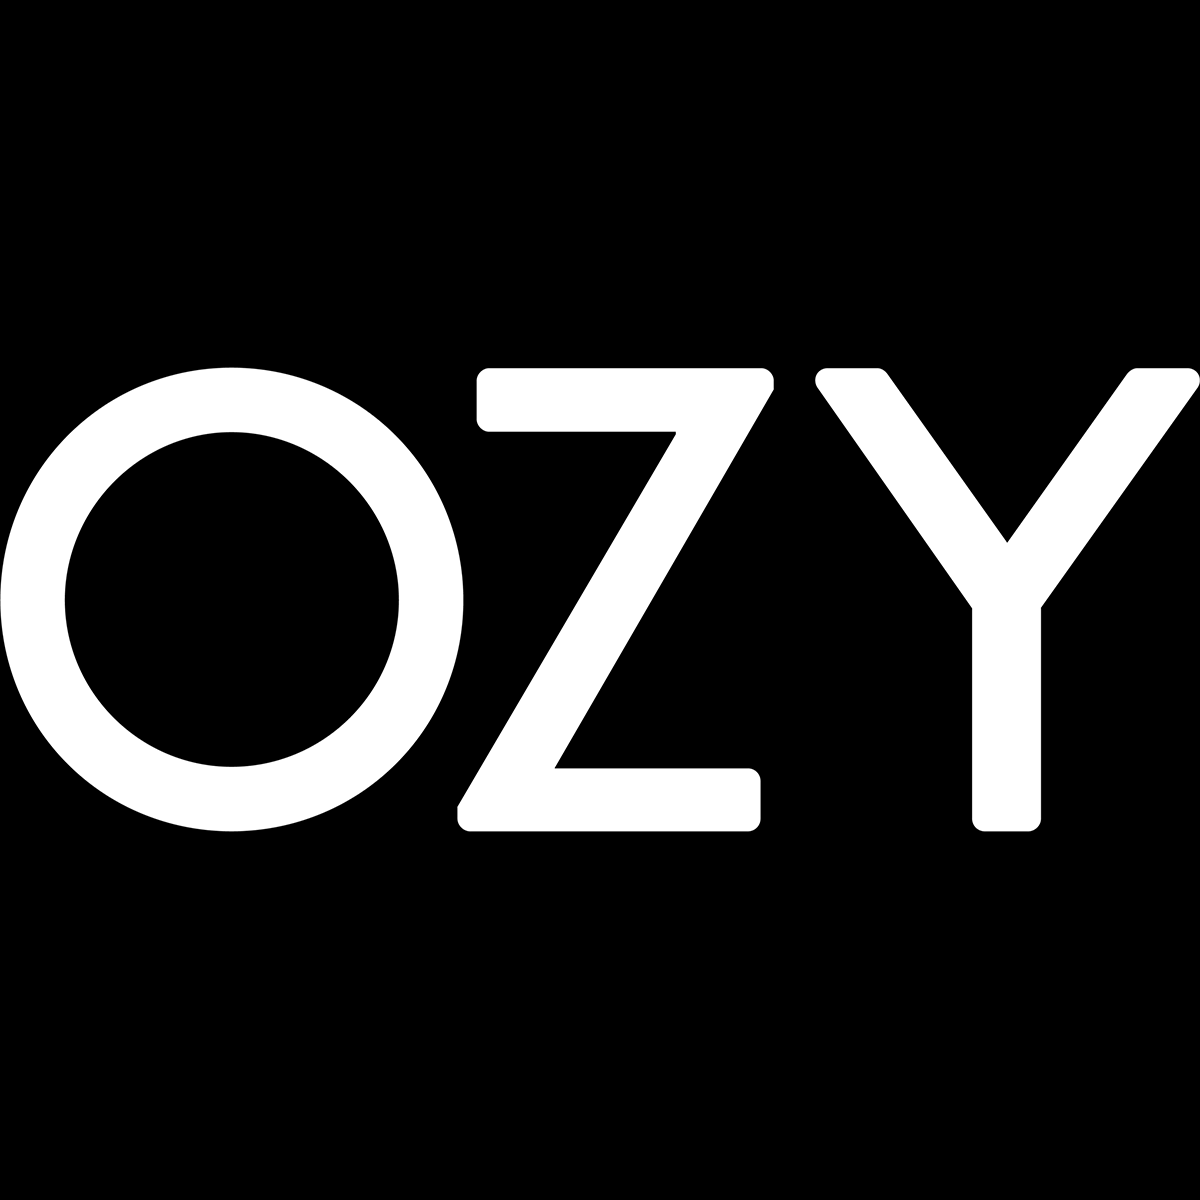 Ozy